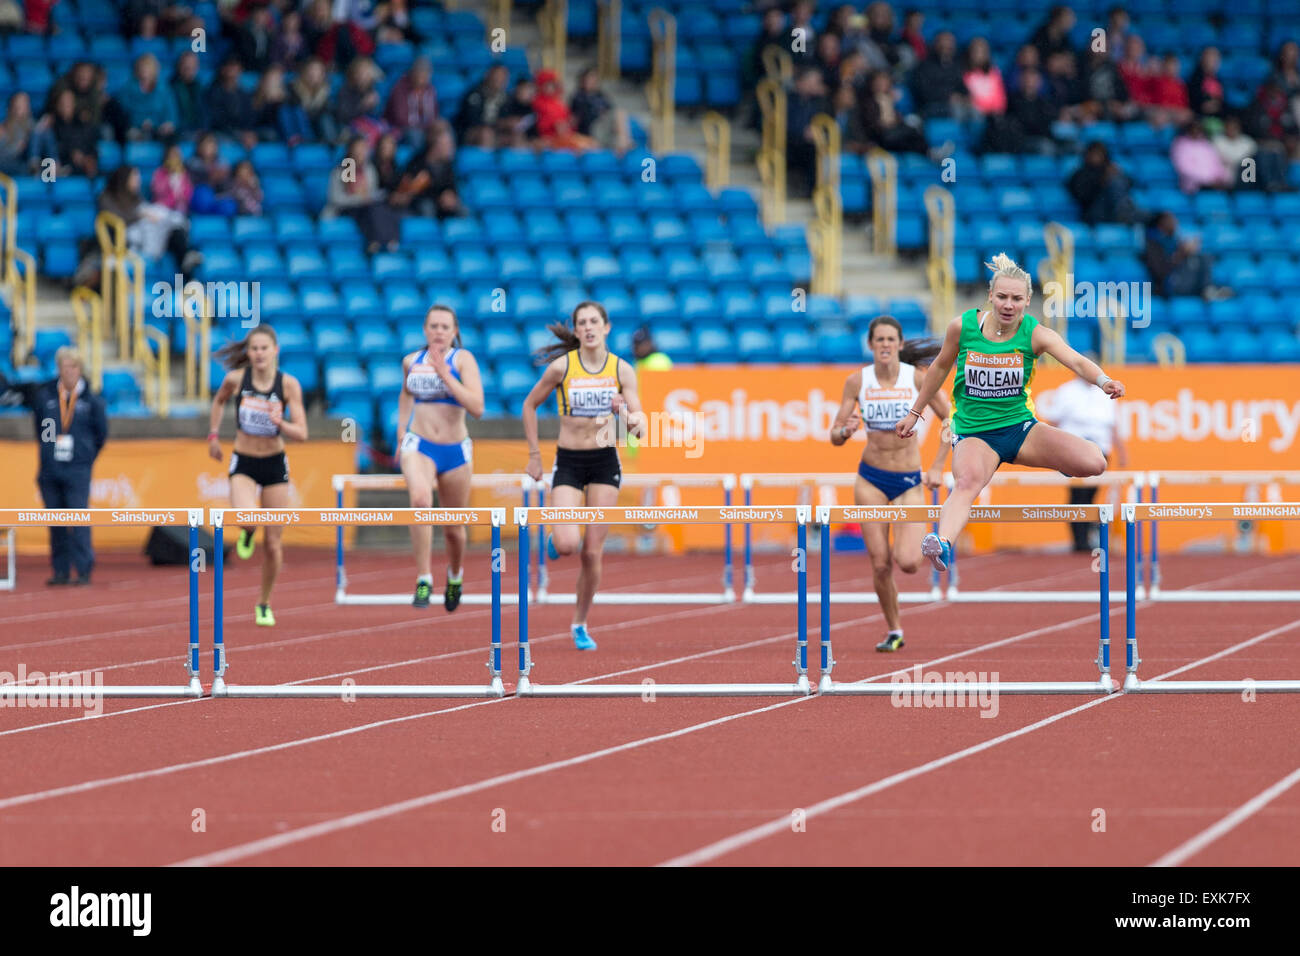 Kaliese SPENCER, women's 400m Hurdles, Diamond League 2014 Sainsbury's  Birmingham Grand Prix, Alexander Stadium, UK Stock Photo - Alamy